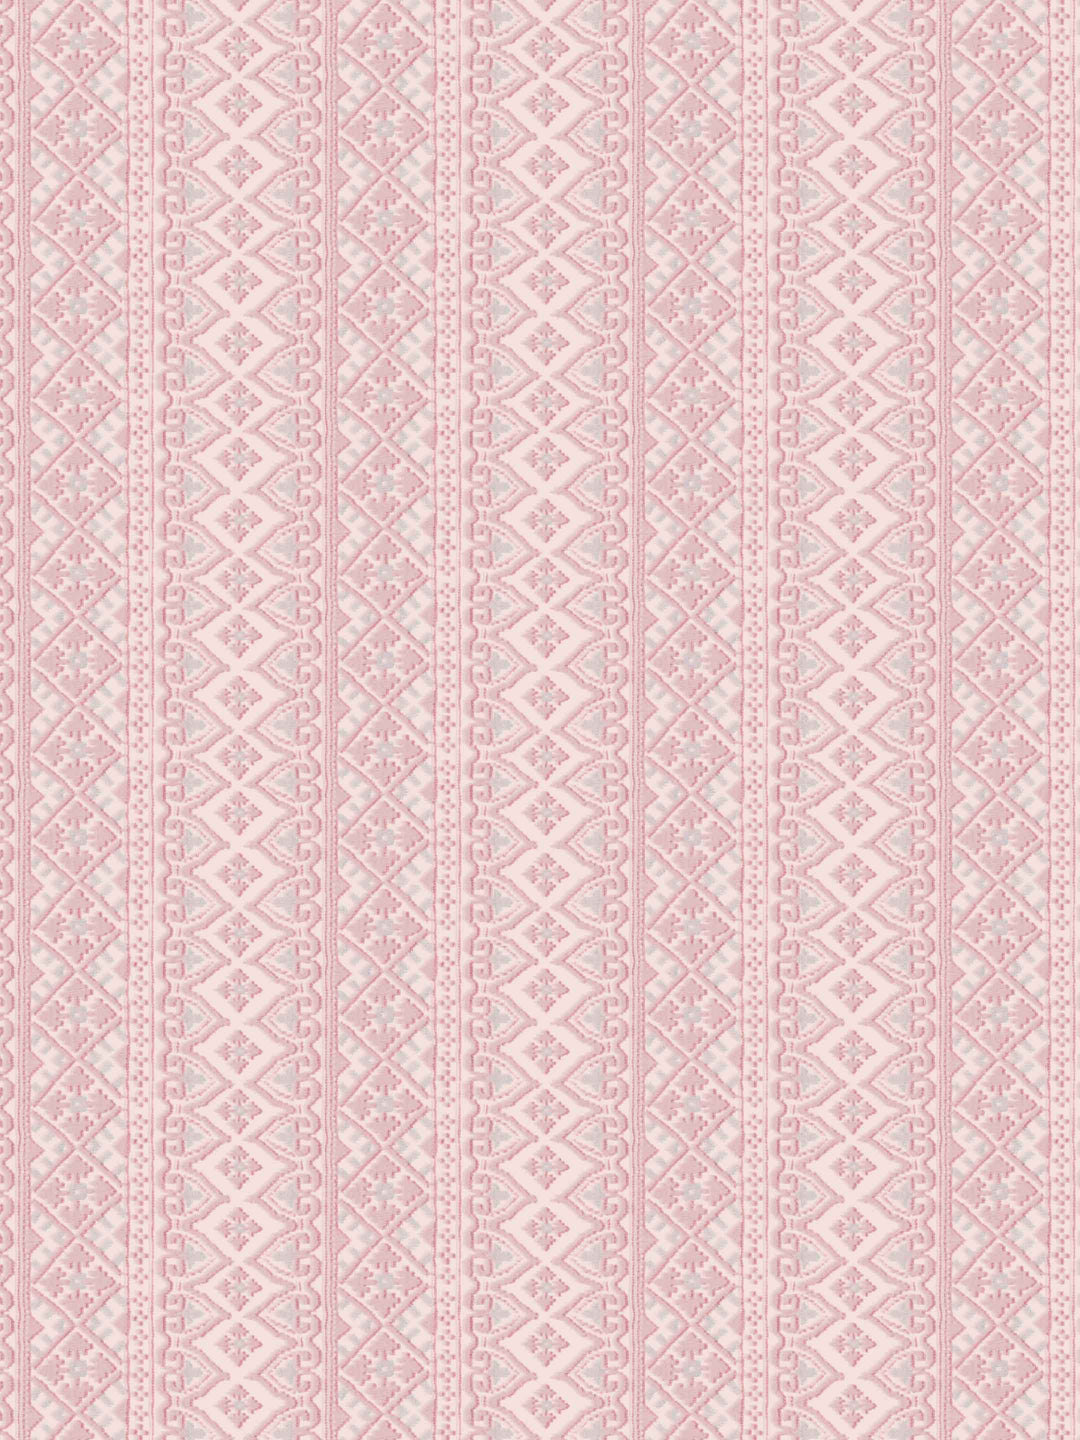 Taklamakan Wallpaper - Berry Pink